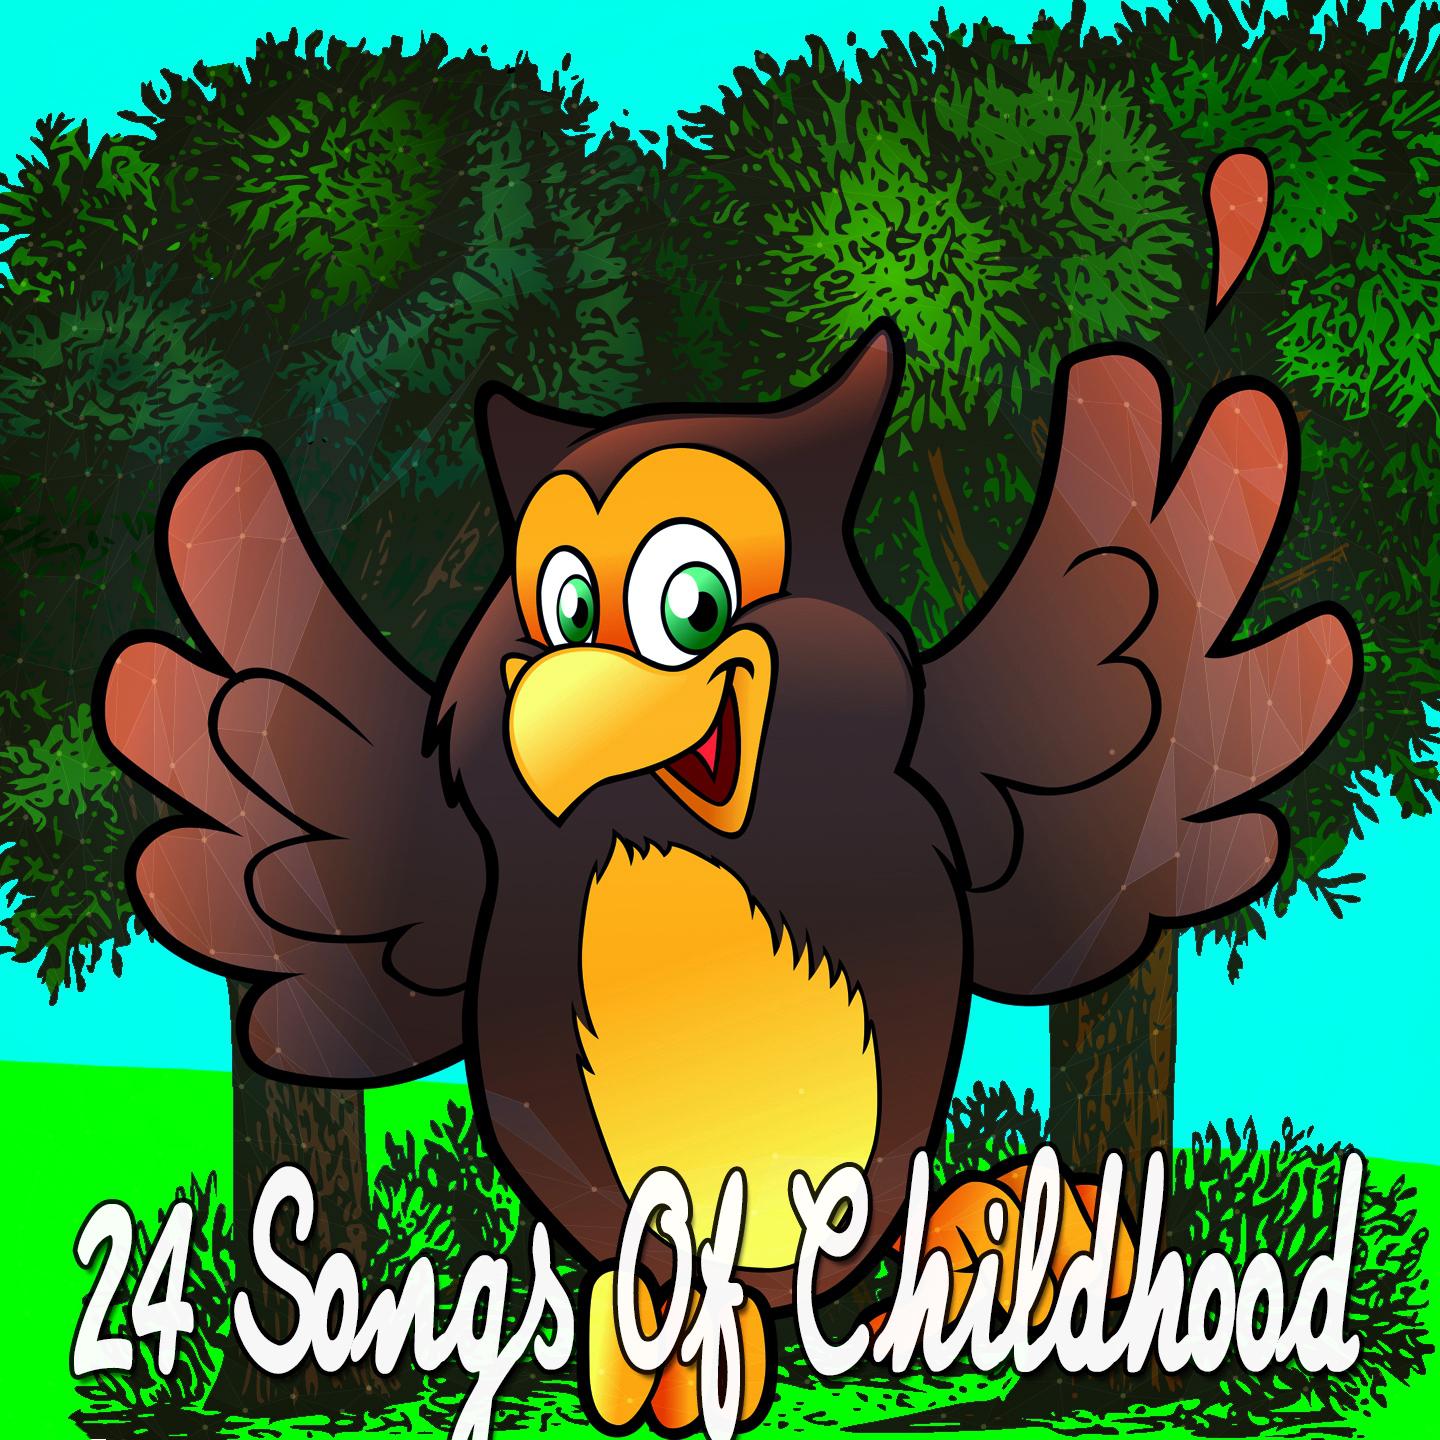 24 Songs Of Childhood